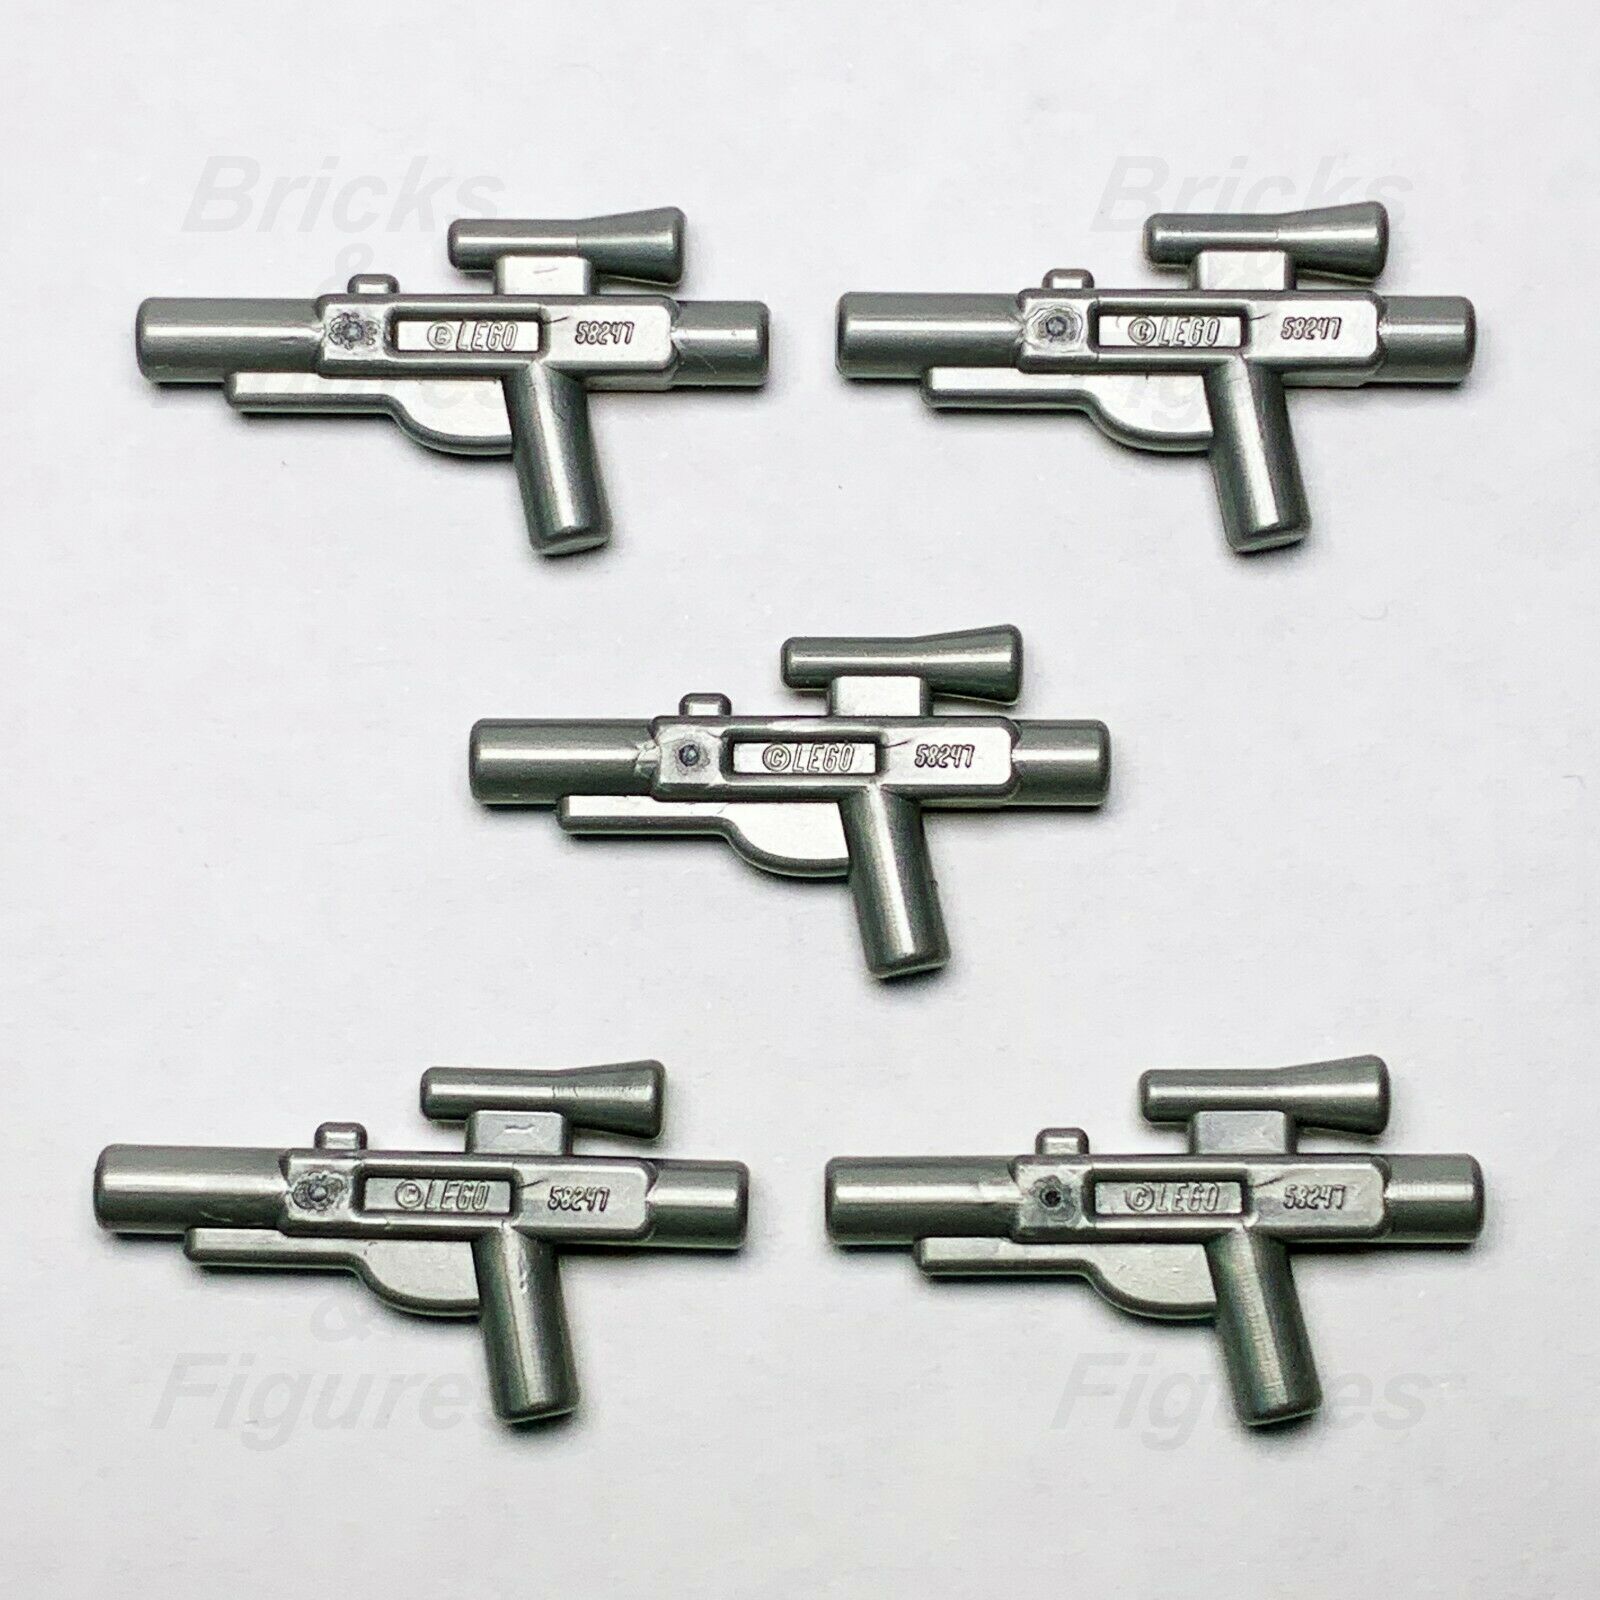 5 x Star Wars LEGO Medium Blaster Flat Silver Gun Minifigure Weapon Parts SW - Bricks & Figures